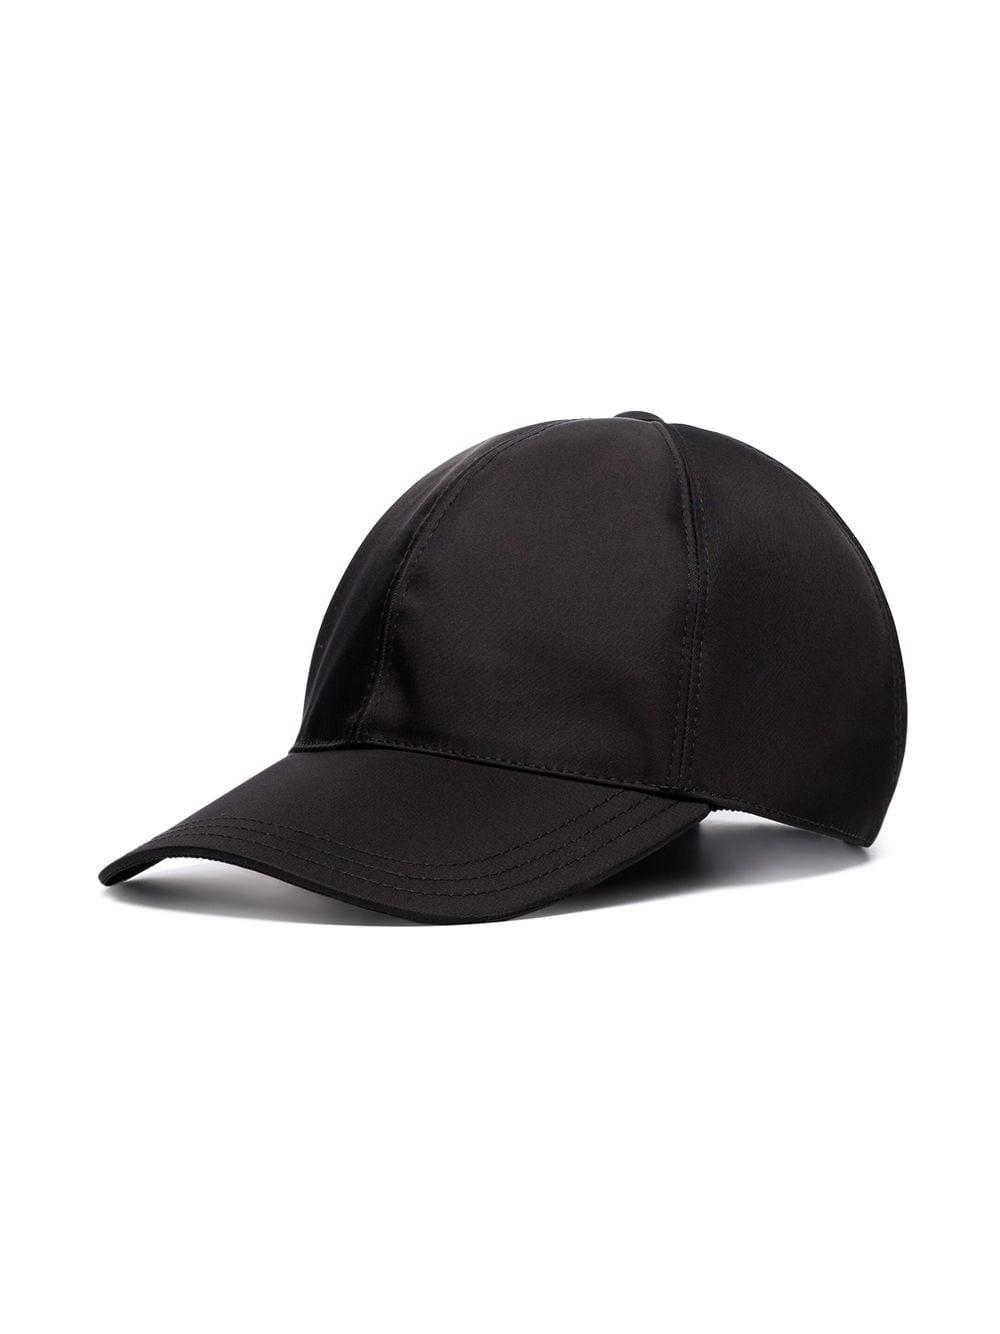 Prada Logo Plaque Baseball Cap in Black for Men - Lyst